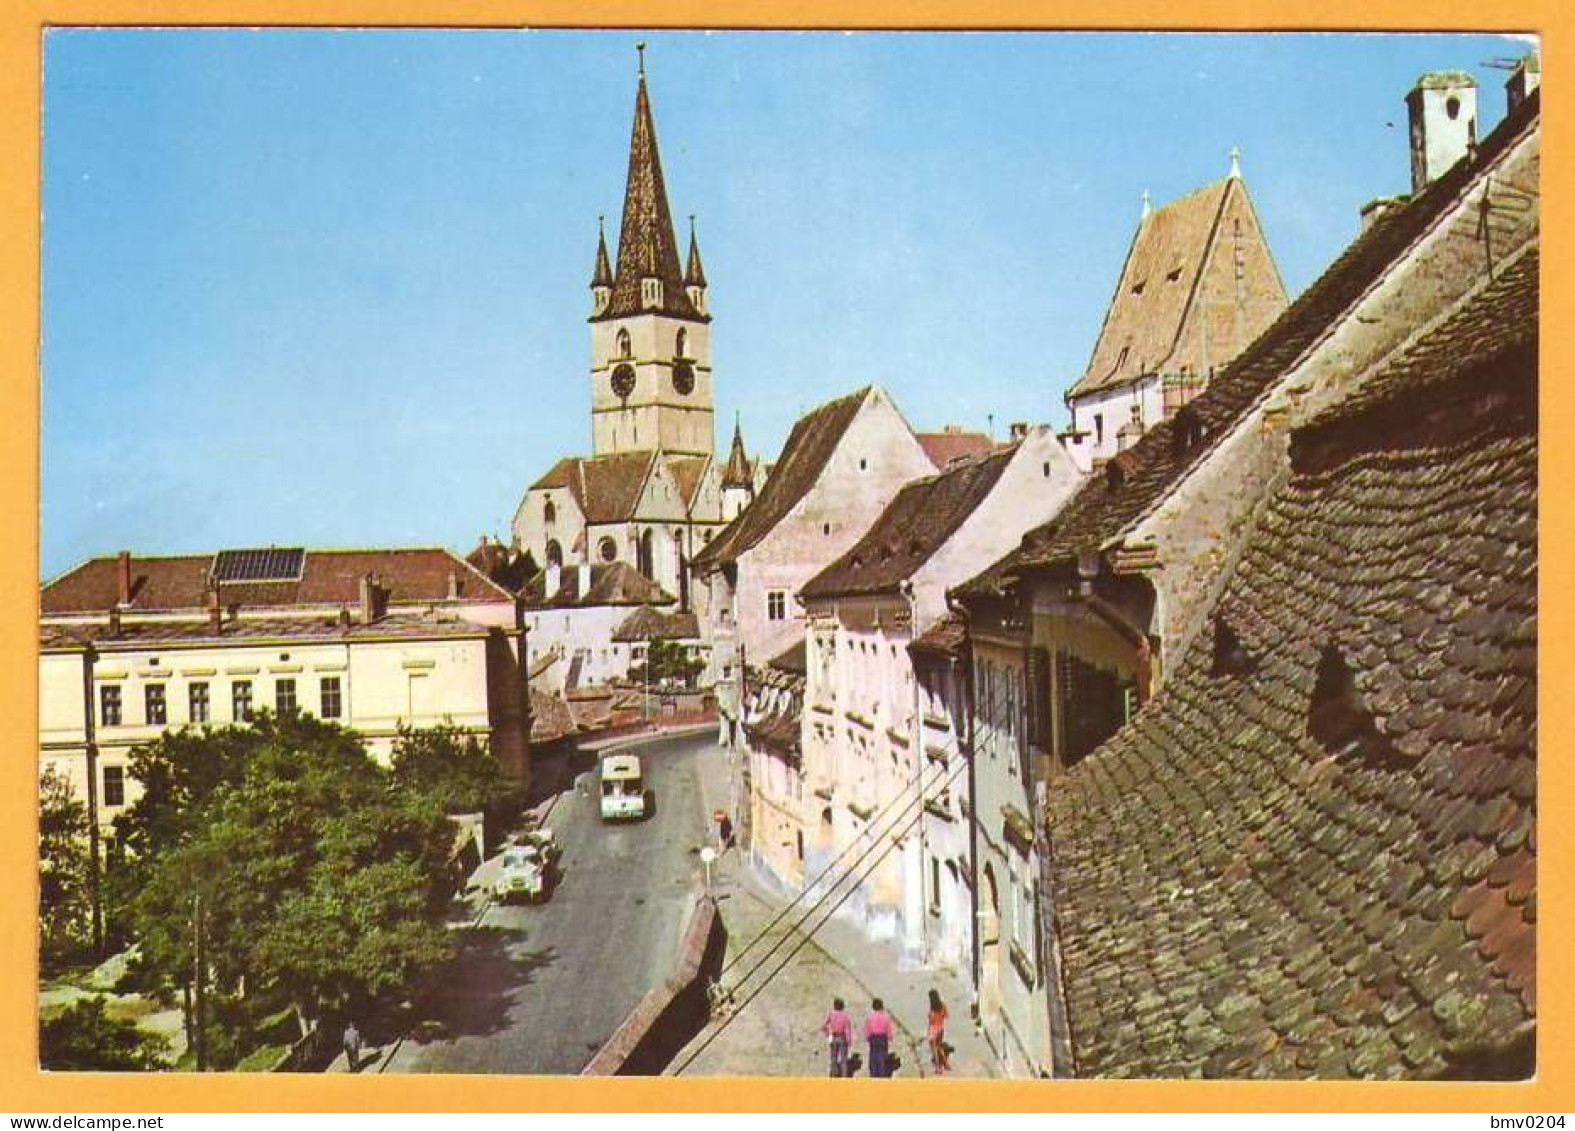 Romania. Rumyniya. Sibiu 14 postcards, architecture, nature